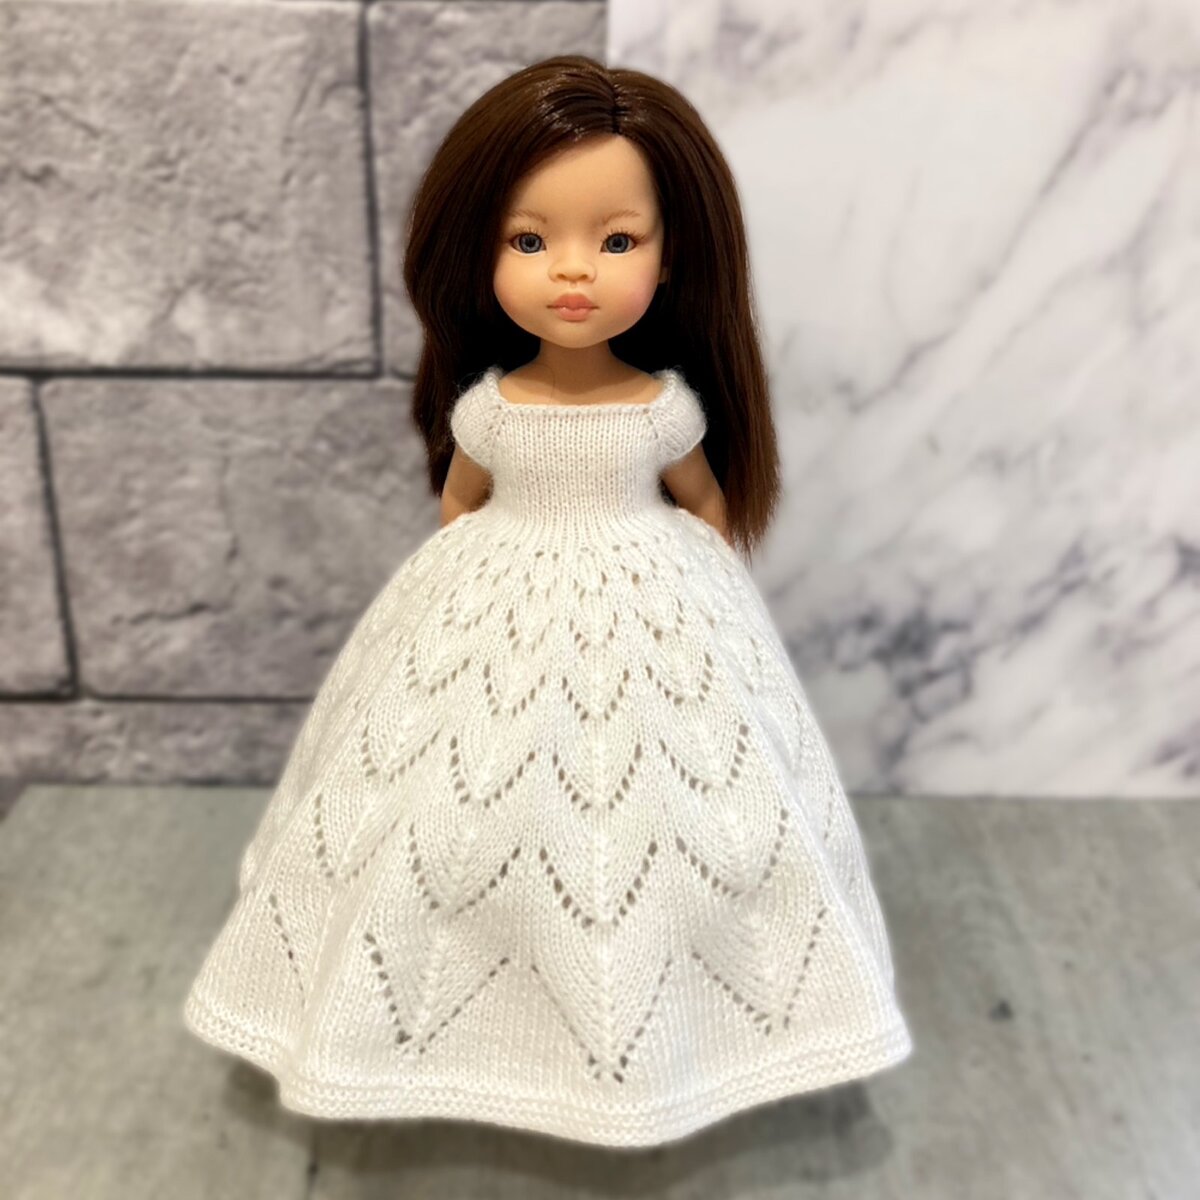 Платье вязаное спицами для куклы Paola Reina. Мастер-класс.